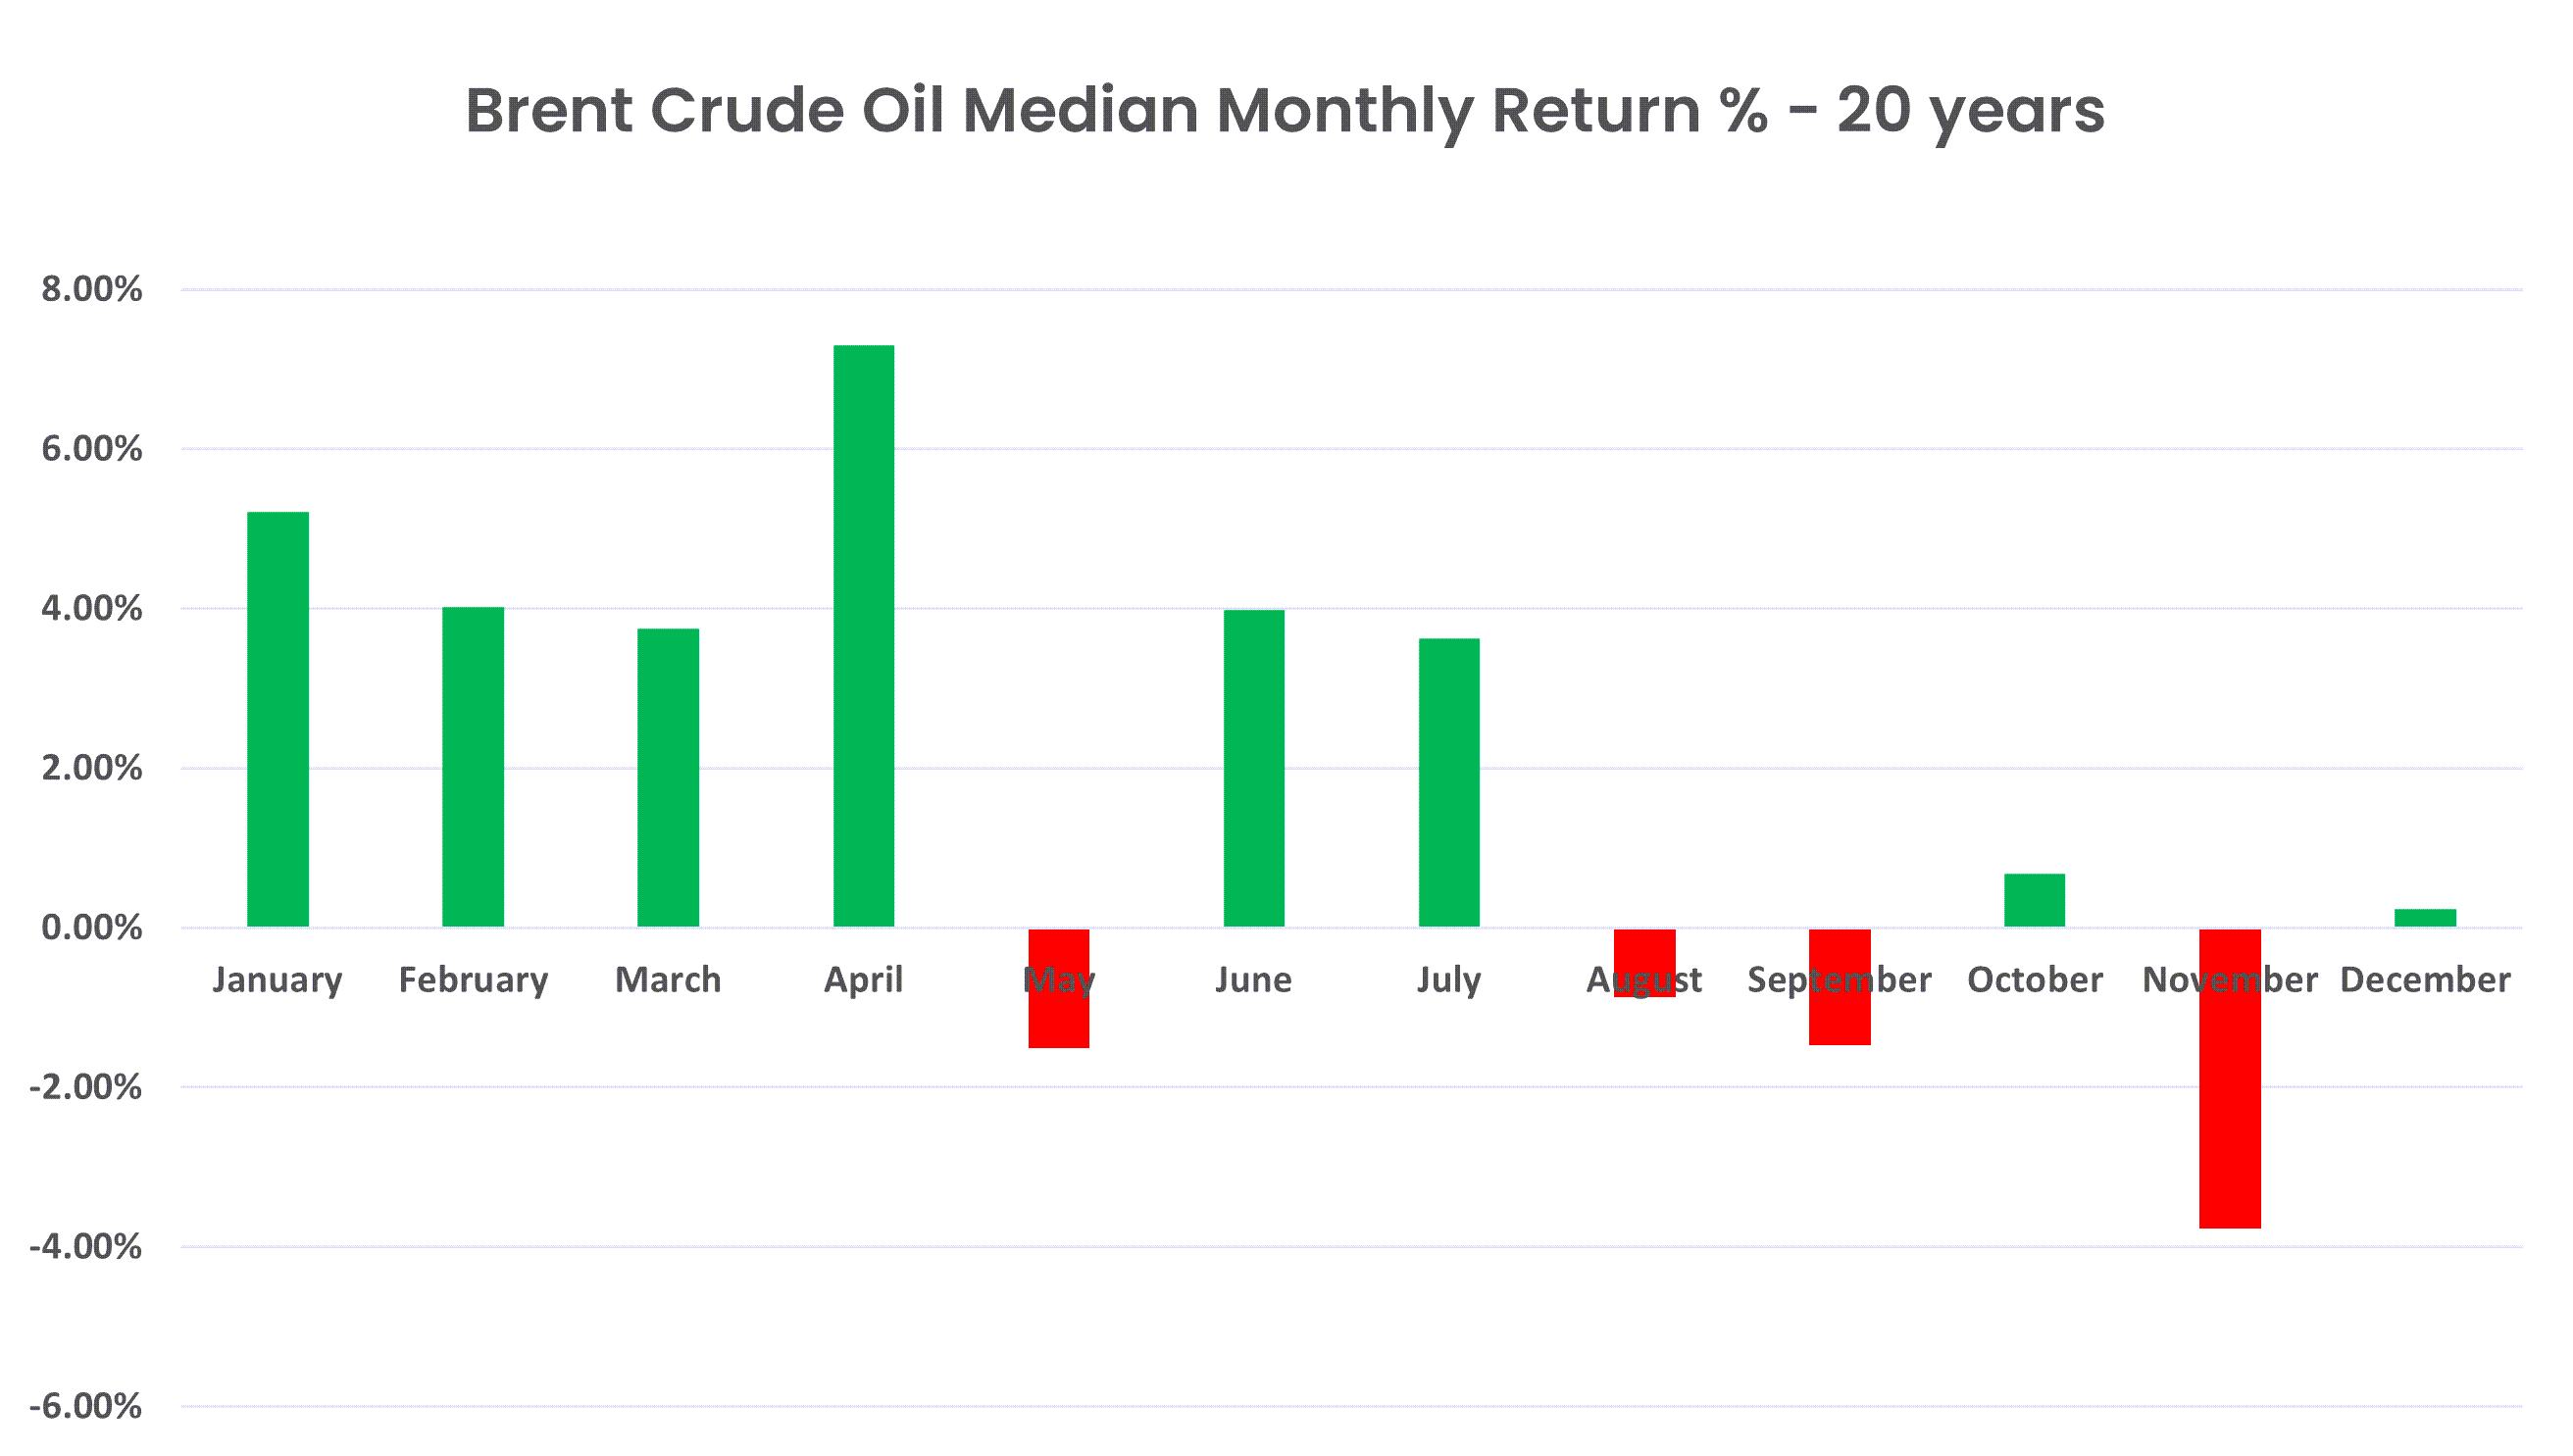 Brent Crude Oil Median Monthly Return last 20 Years